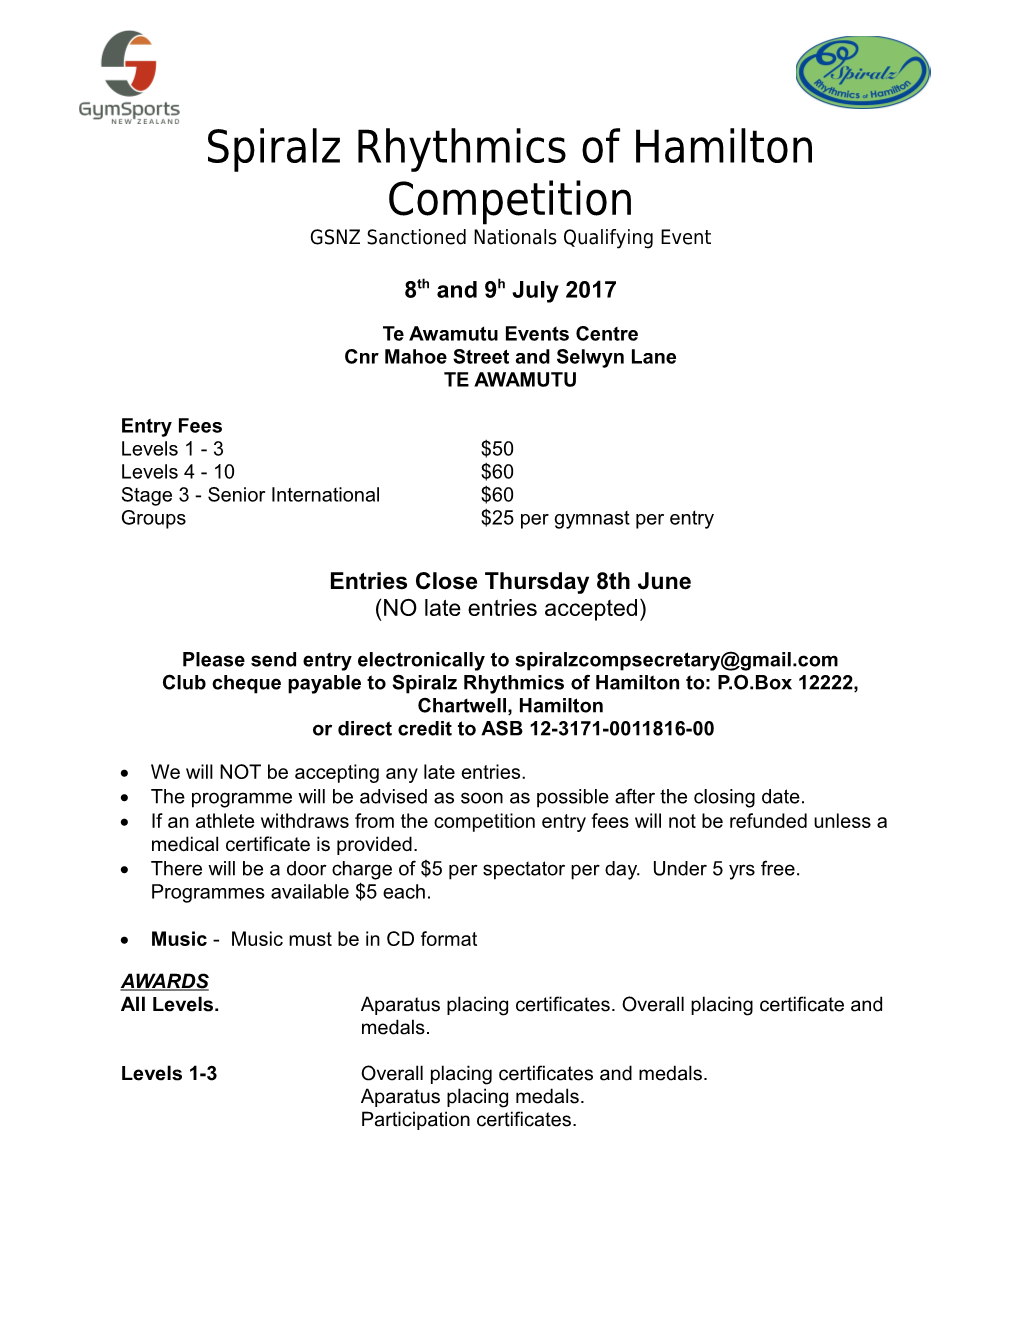 Spiralz Rhythmics of Hamilton Competition